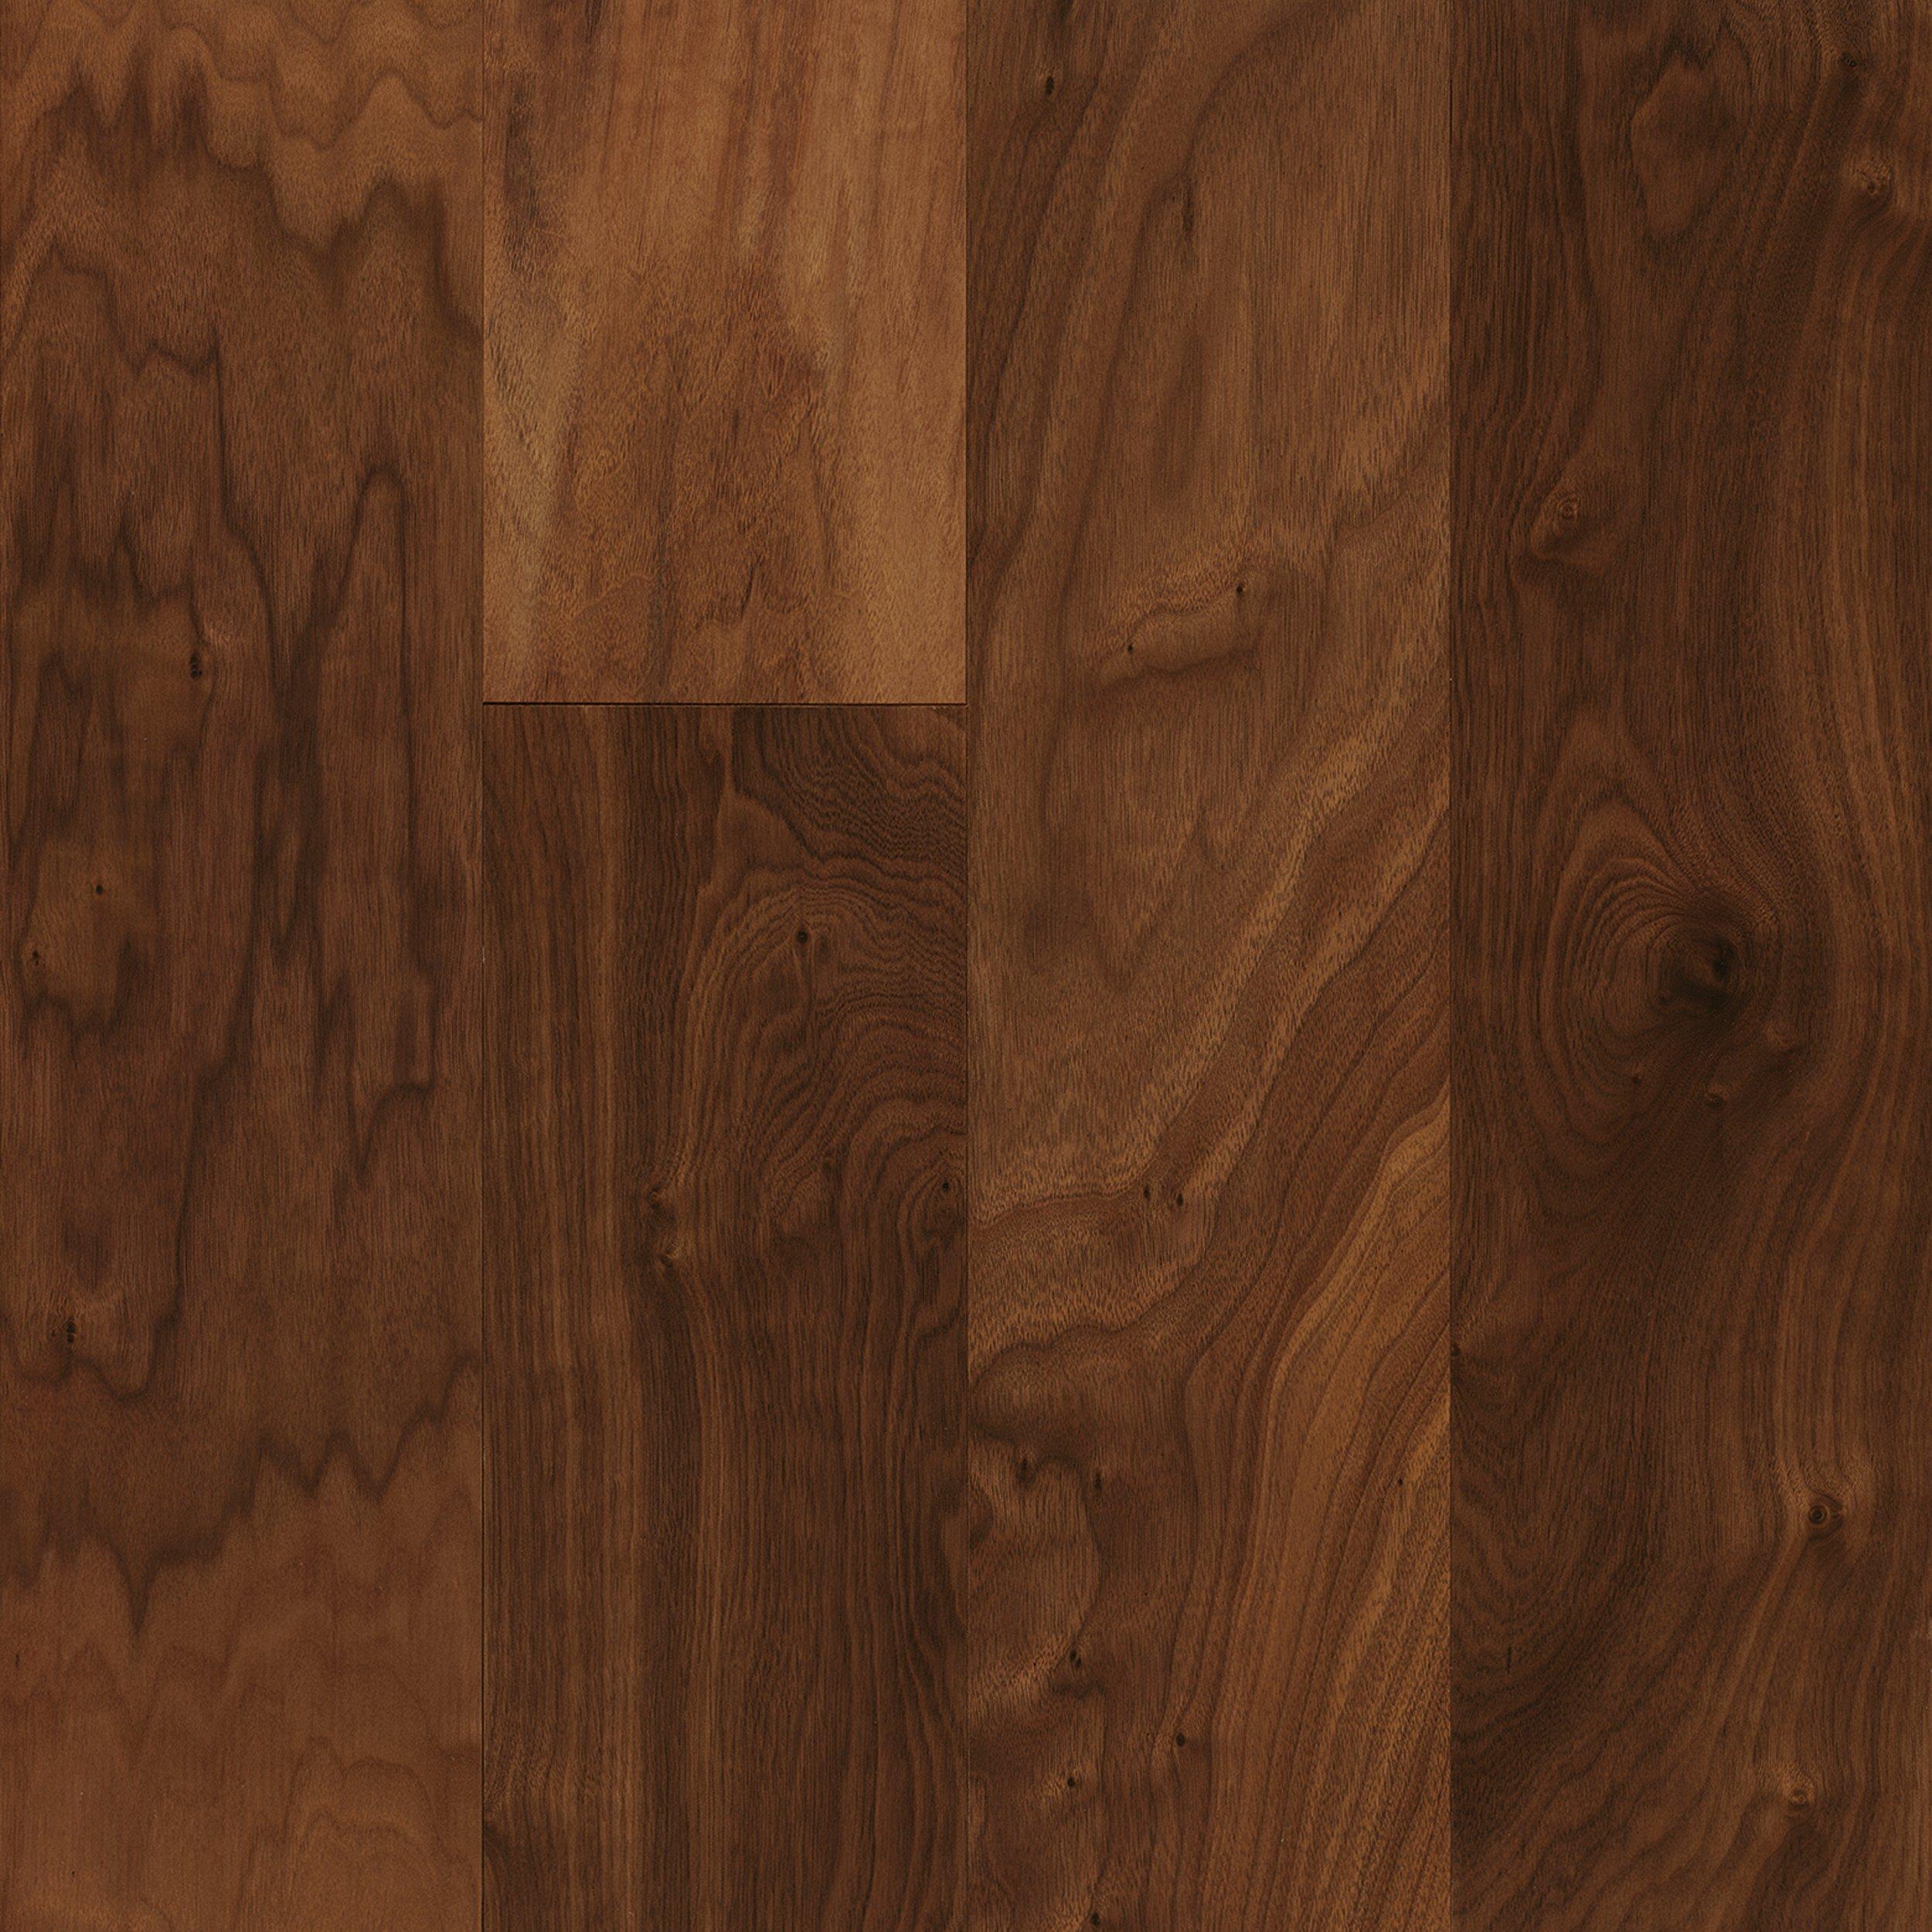 Walnut Parma Smooth Engineered Hardwood, Turman Hardwood Flooring Warm Walnut